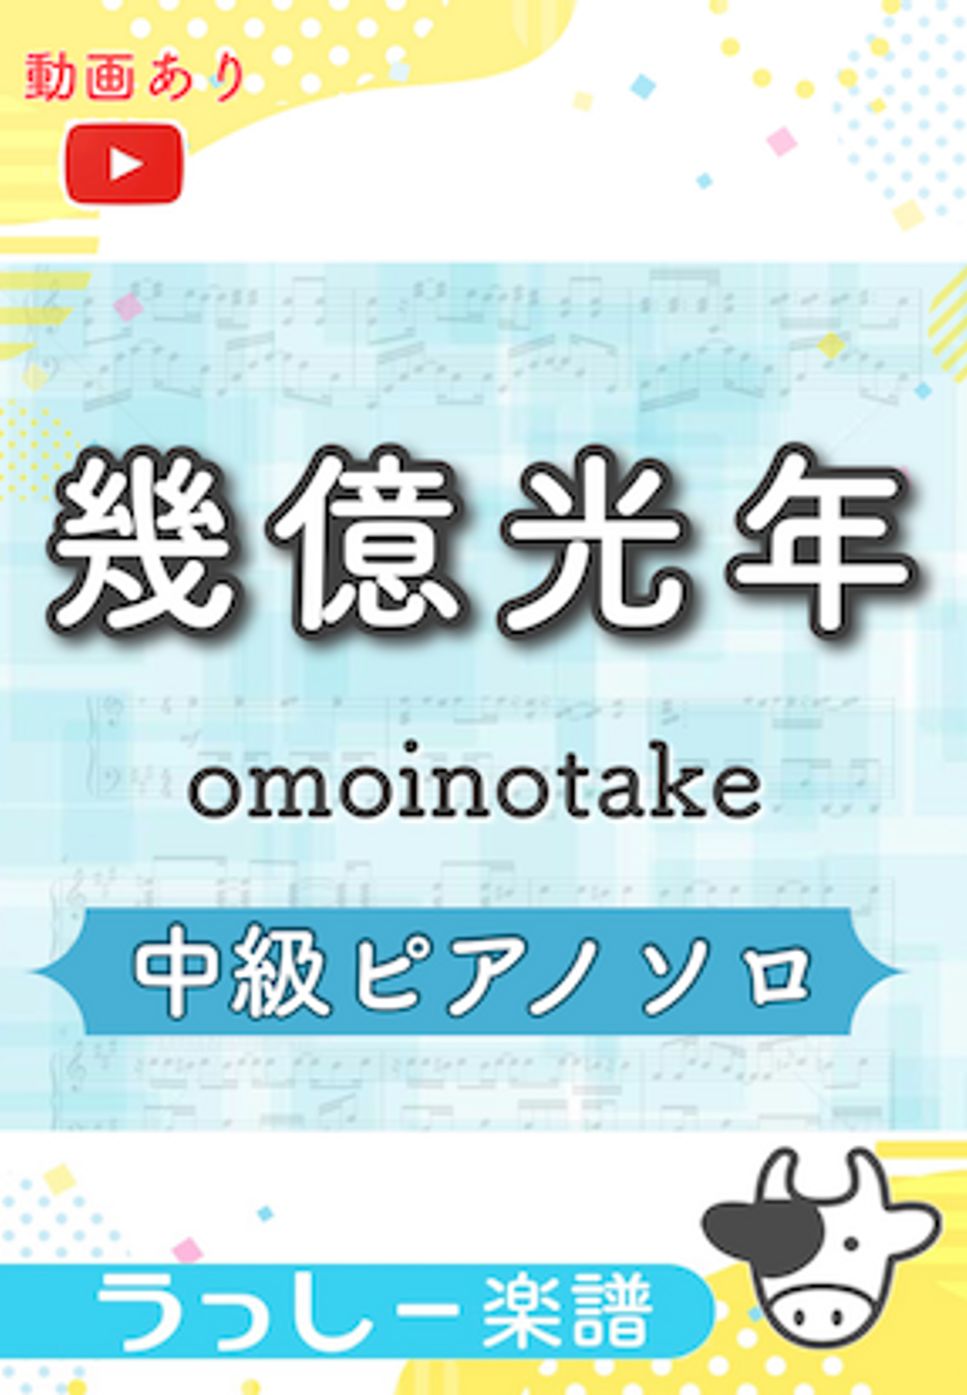 omoinotake - 幾億光年 (ドラマ「Eye love you」主題歌) by 牛武奏人